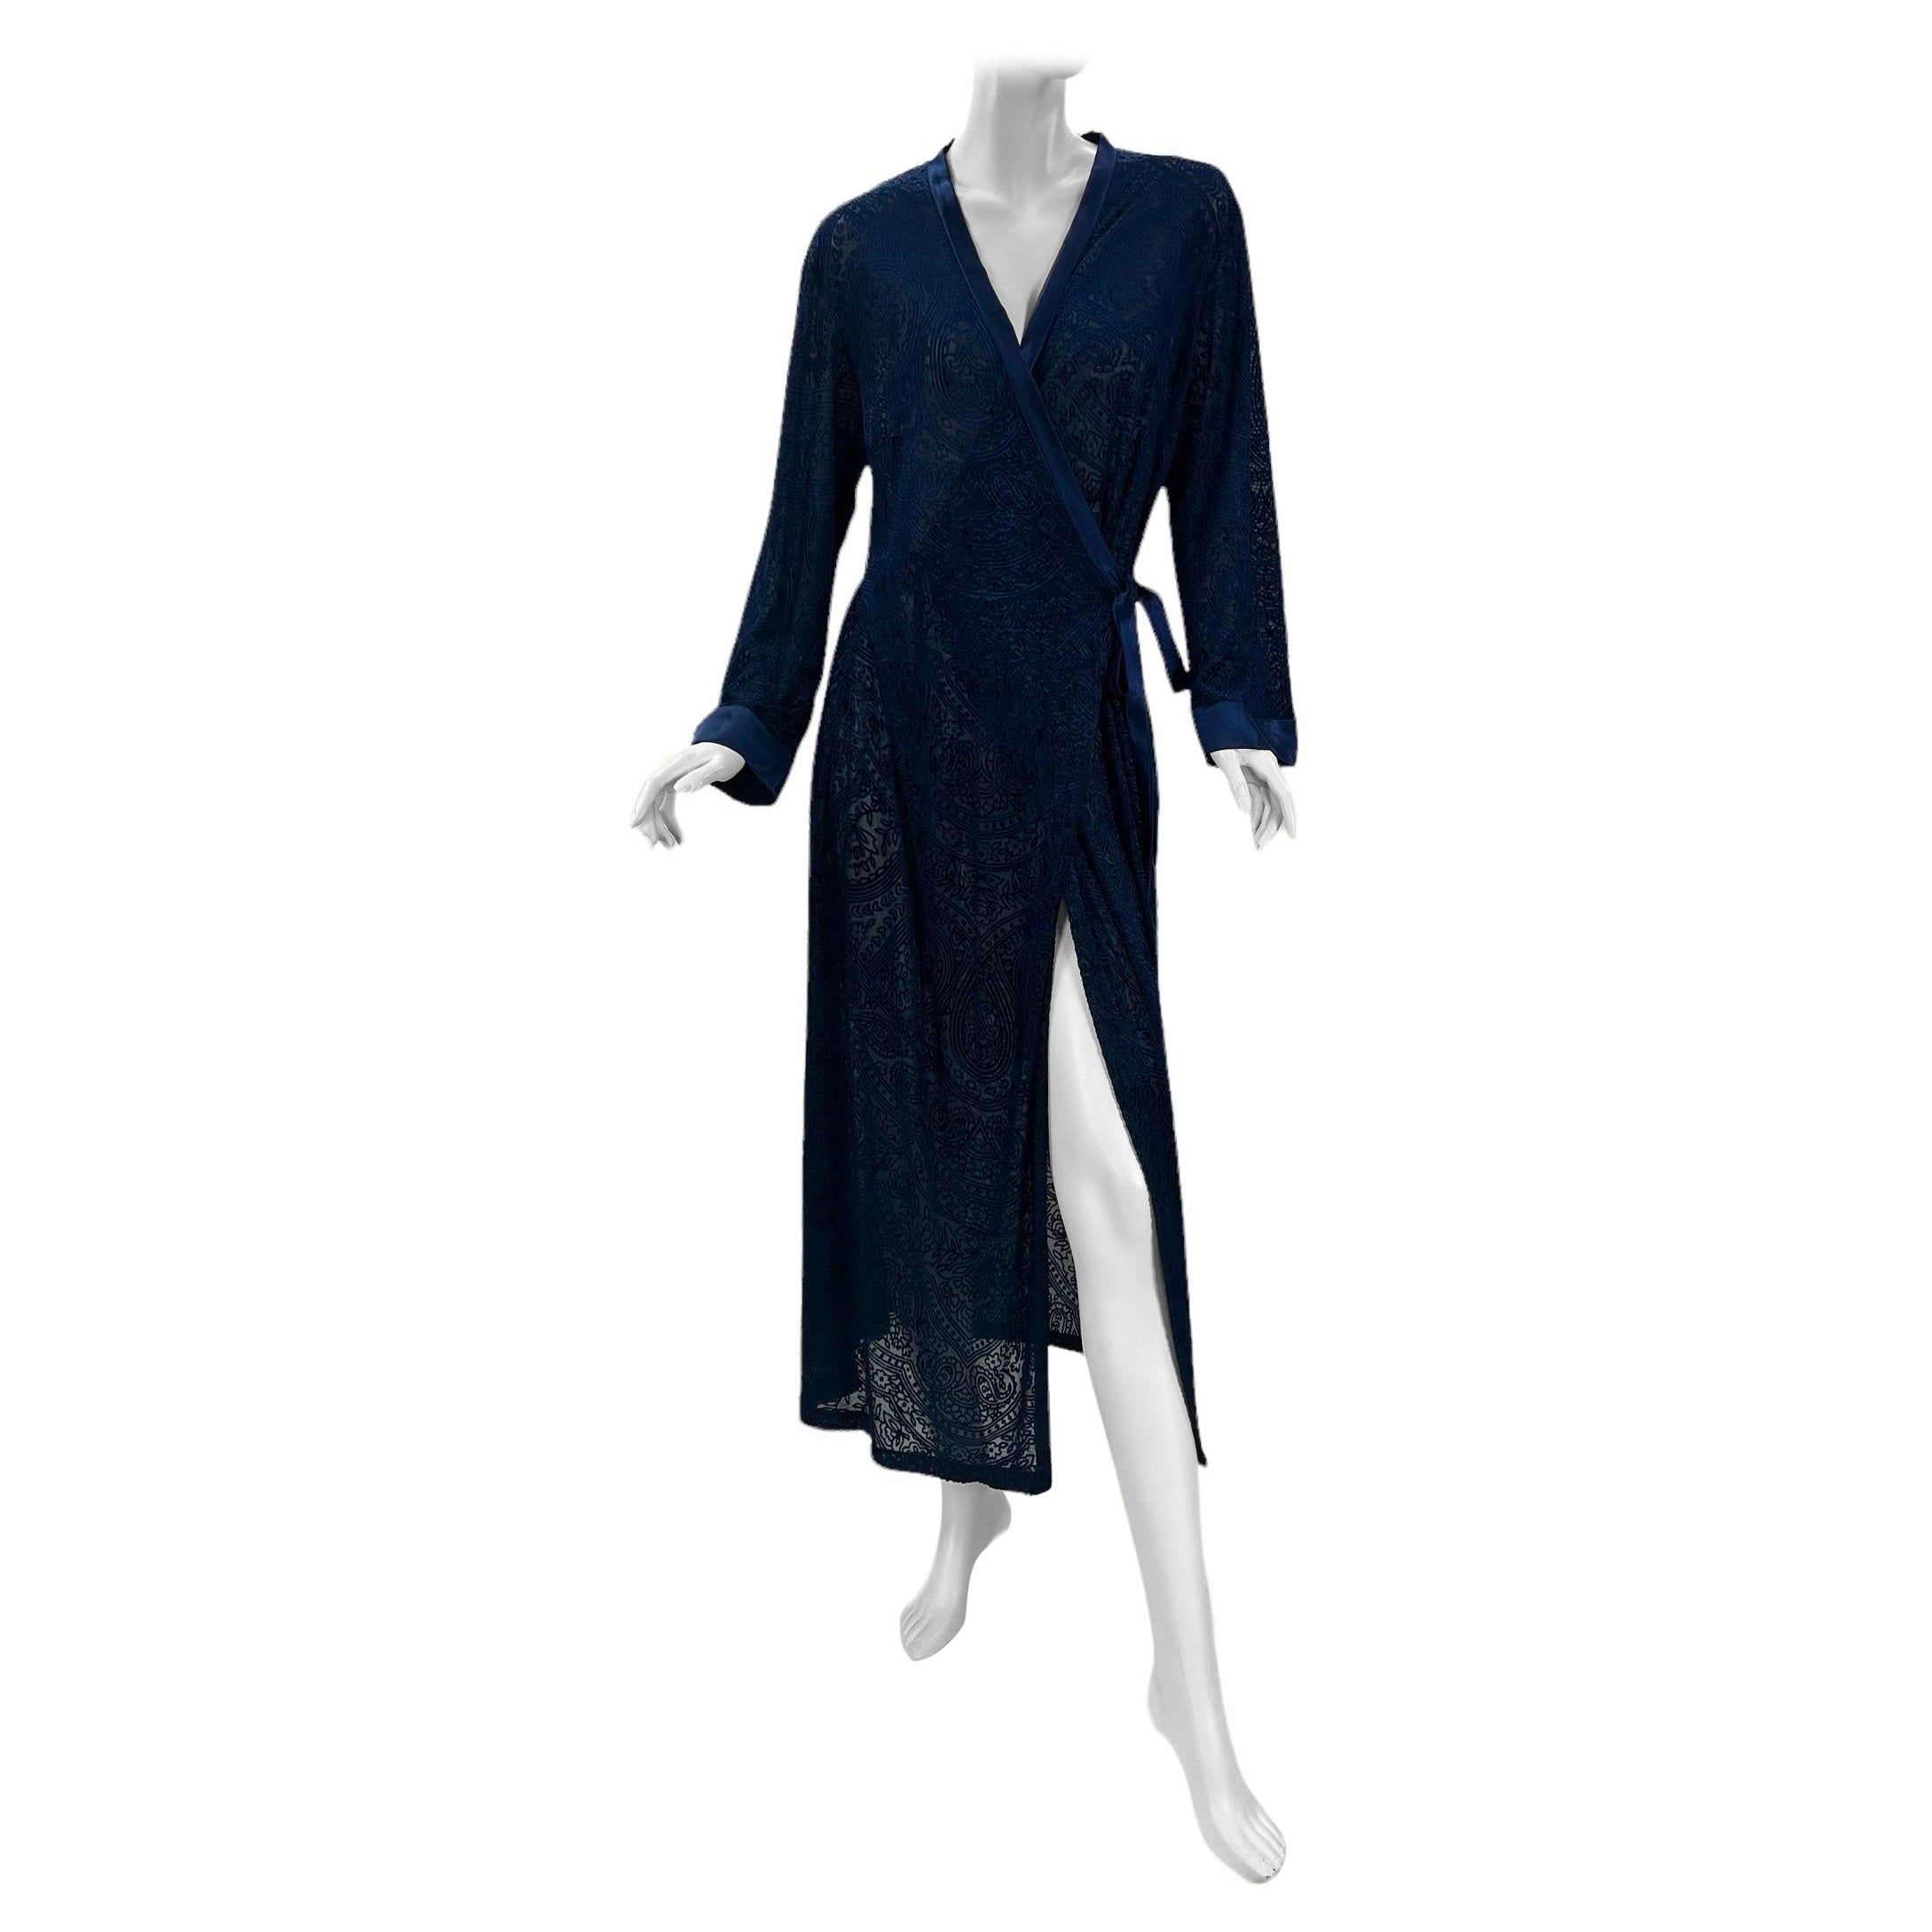 New Vintage Oscar de la Renta midnight blue devore velvet lounge dress / robe  For Sale